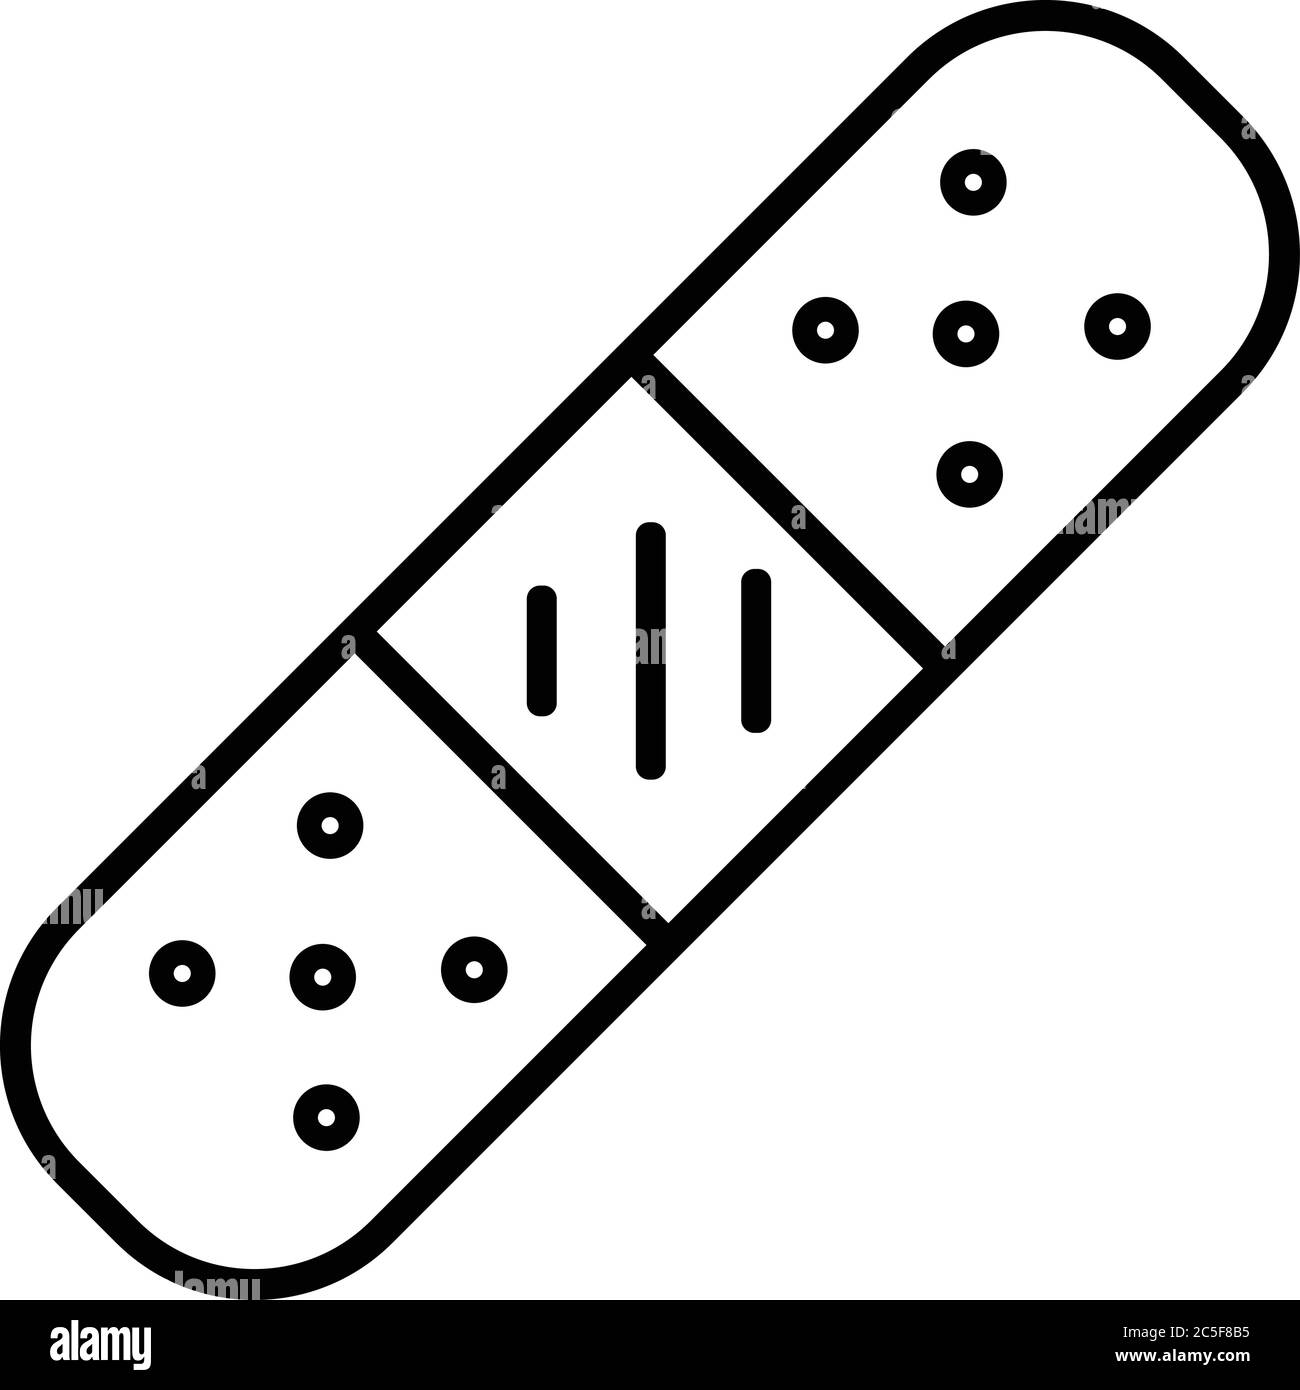 Plaster Bandage Medical Care Health Pharmacy Illustration Stock Vector